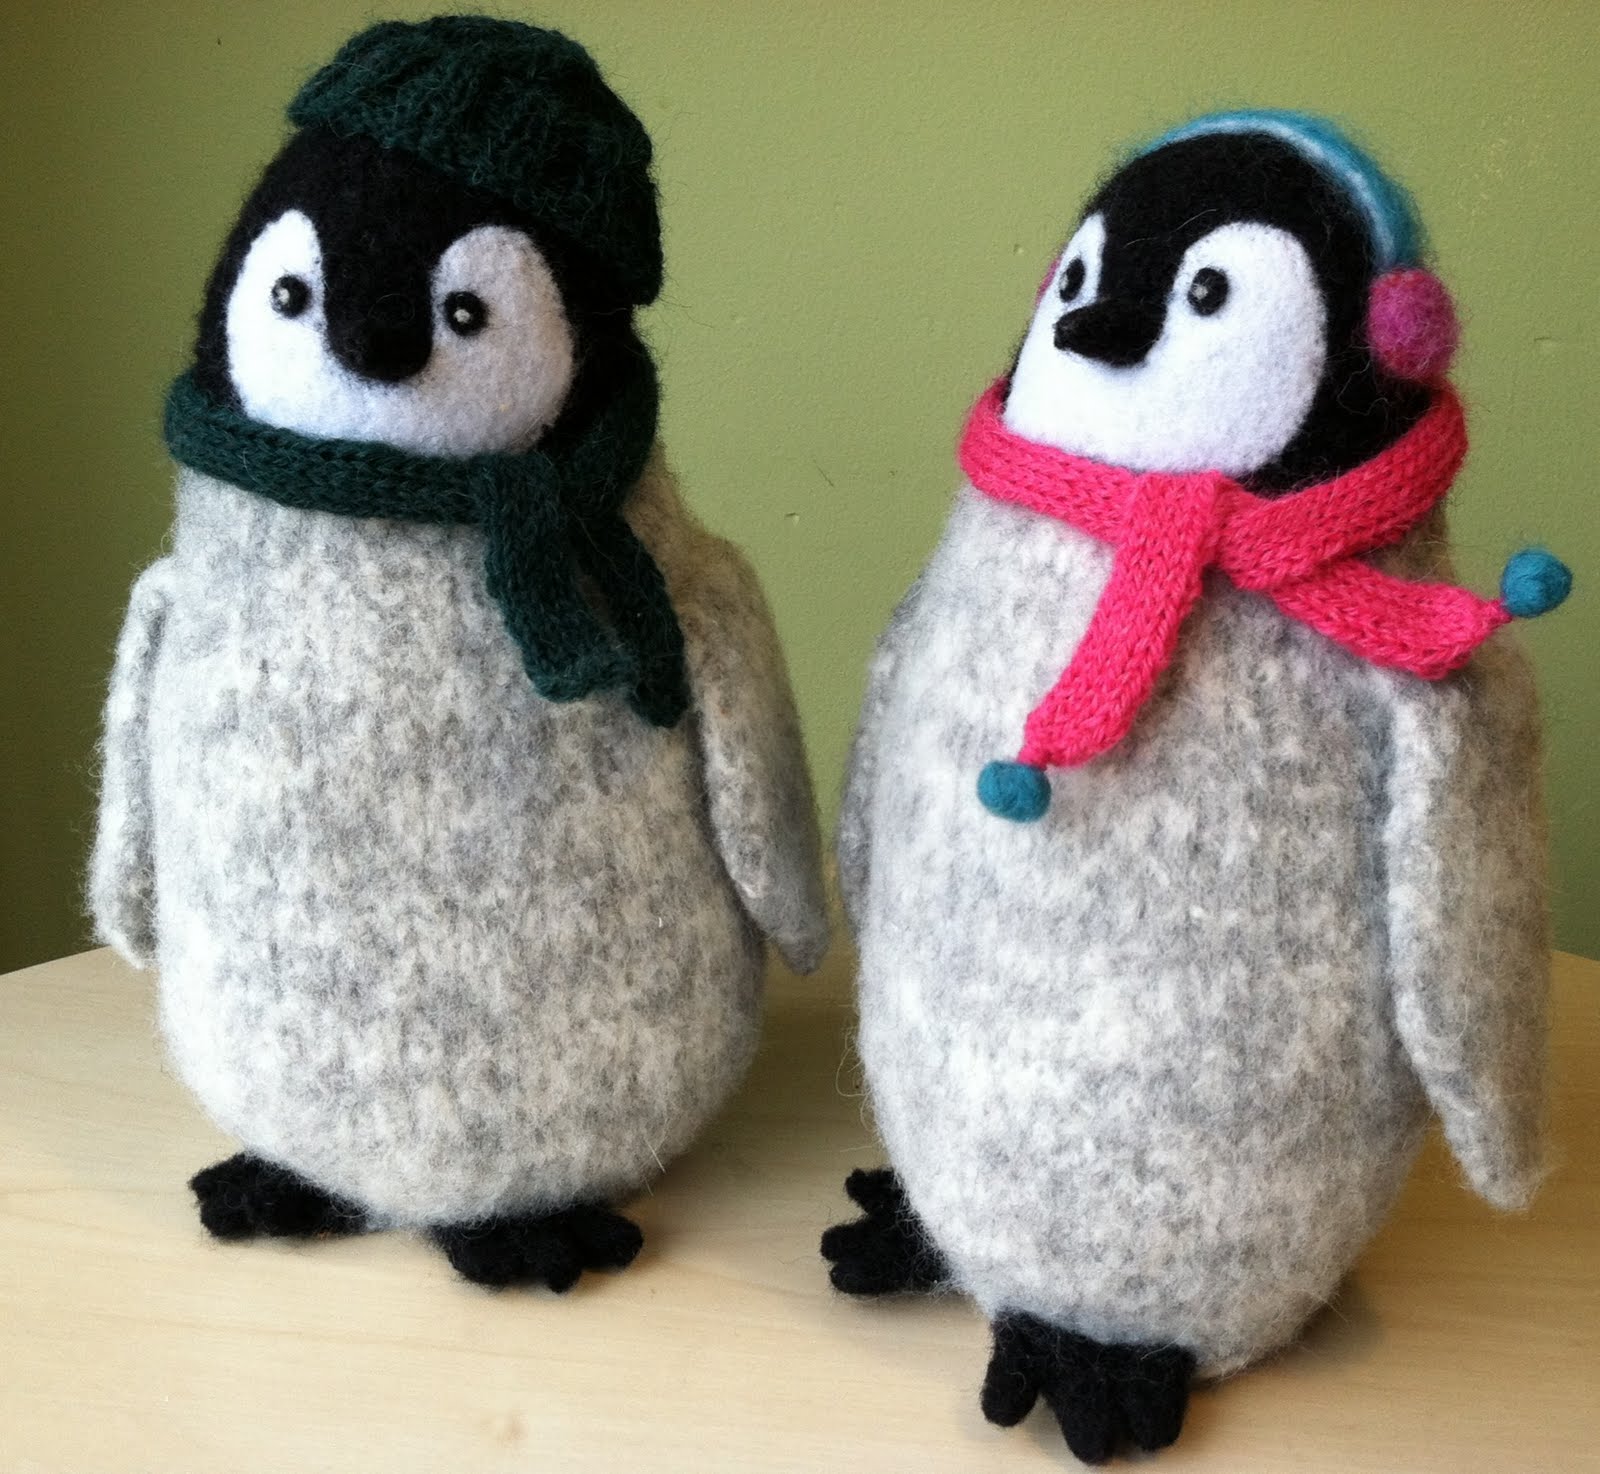 The Yarn Garden Blog: Woolly Penguins